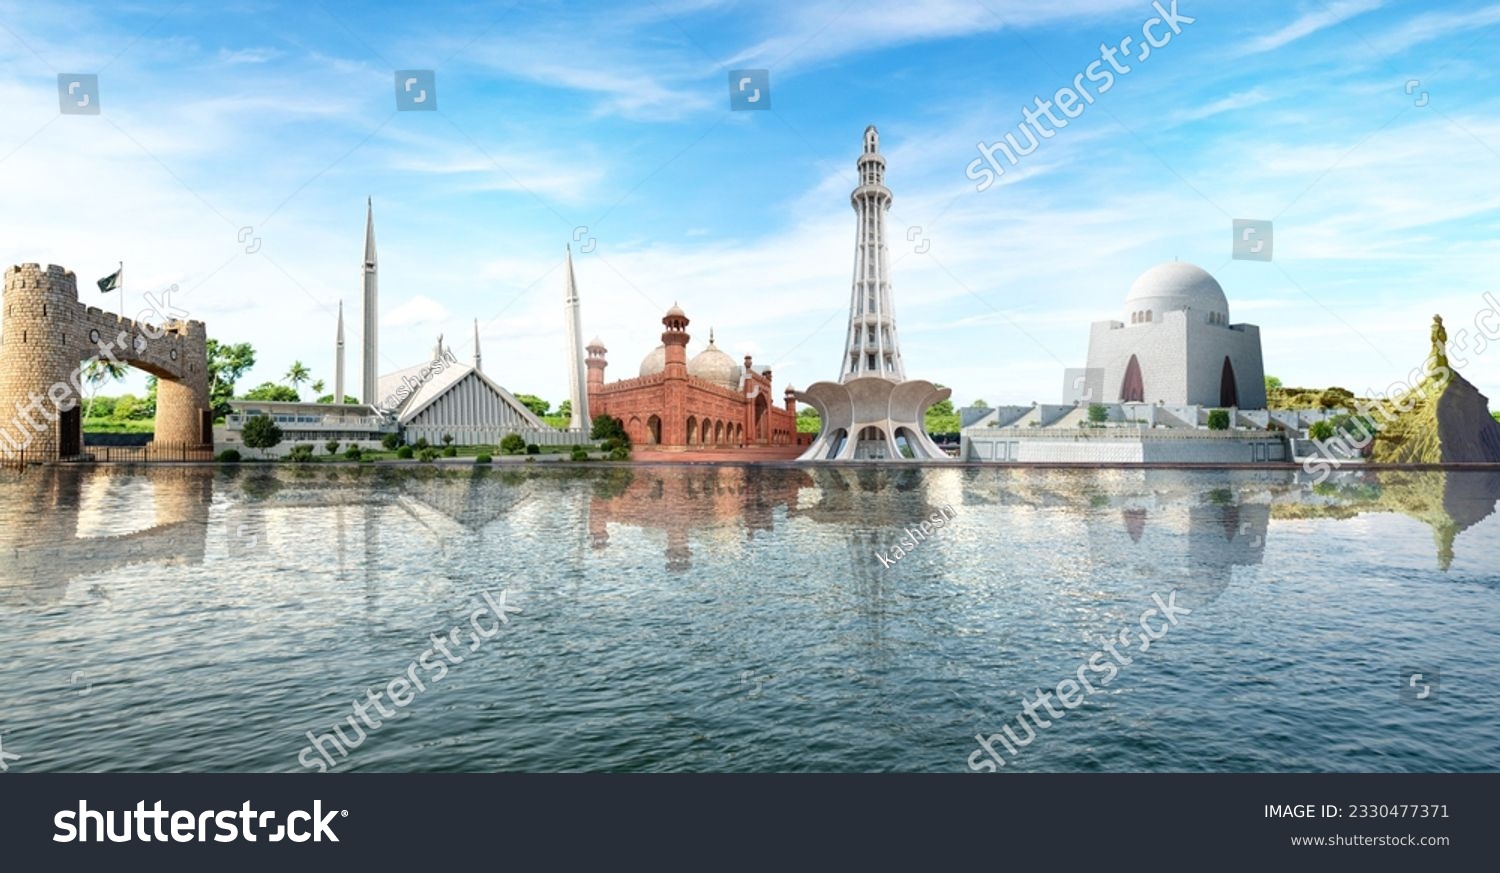 Pakistan Monuments. Sea Environment. Quaid-e-Azam Tomb. Minar e Pakistan. Khyber Gate. Faisal Mosque. Badshahi Mosque. #2330477371